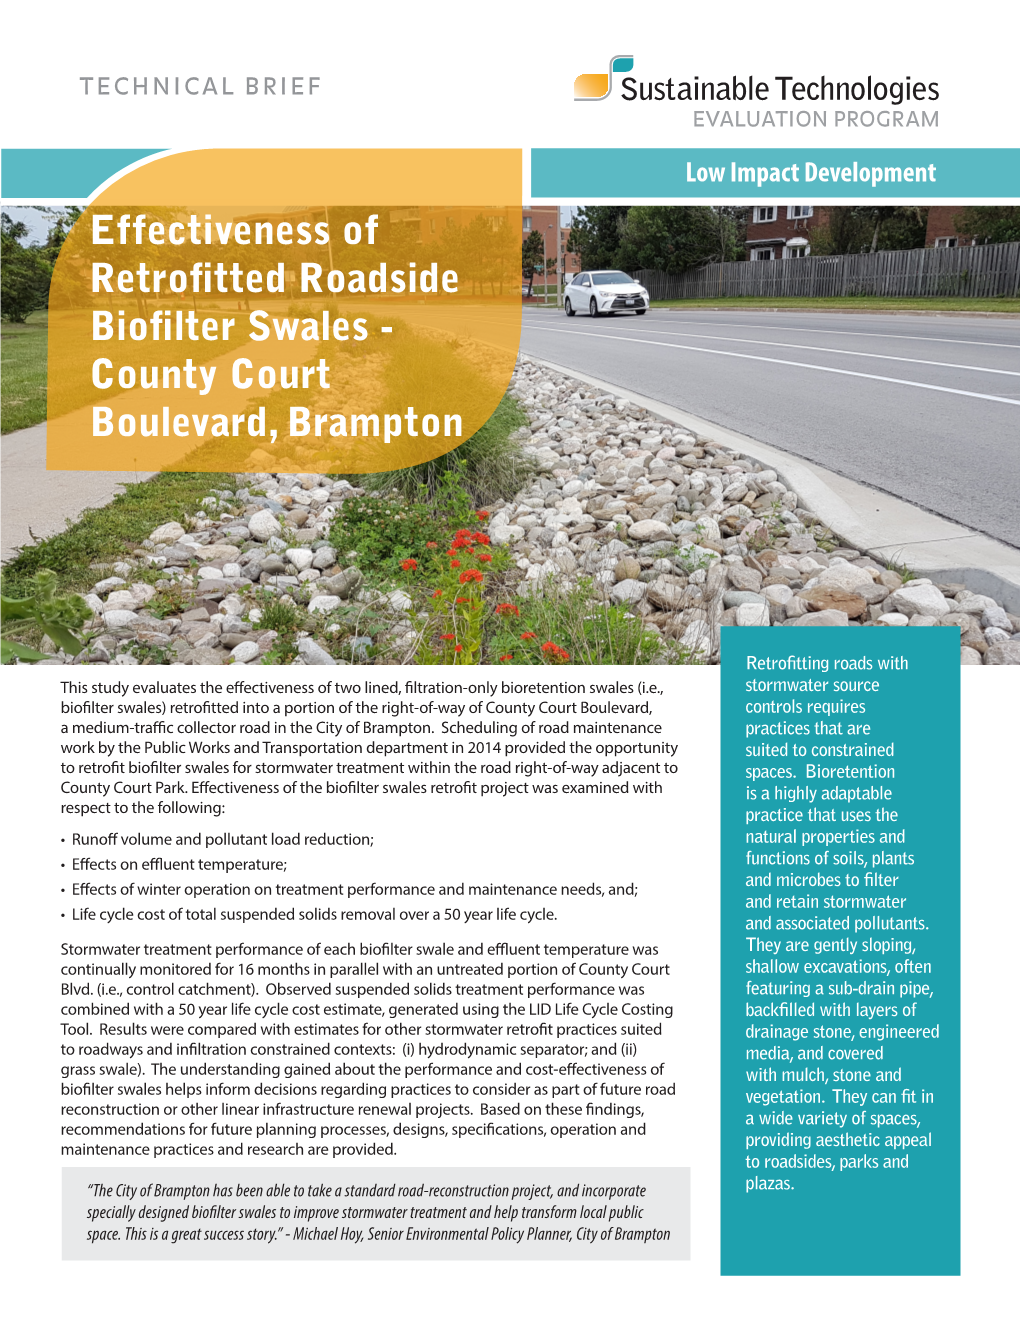 Effectiveness of Retrofitted Roadside Biofilter Swales - County Court Boulevard, Brampton